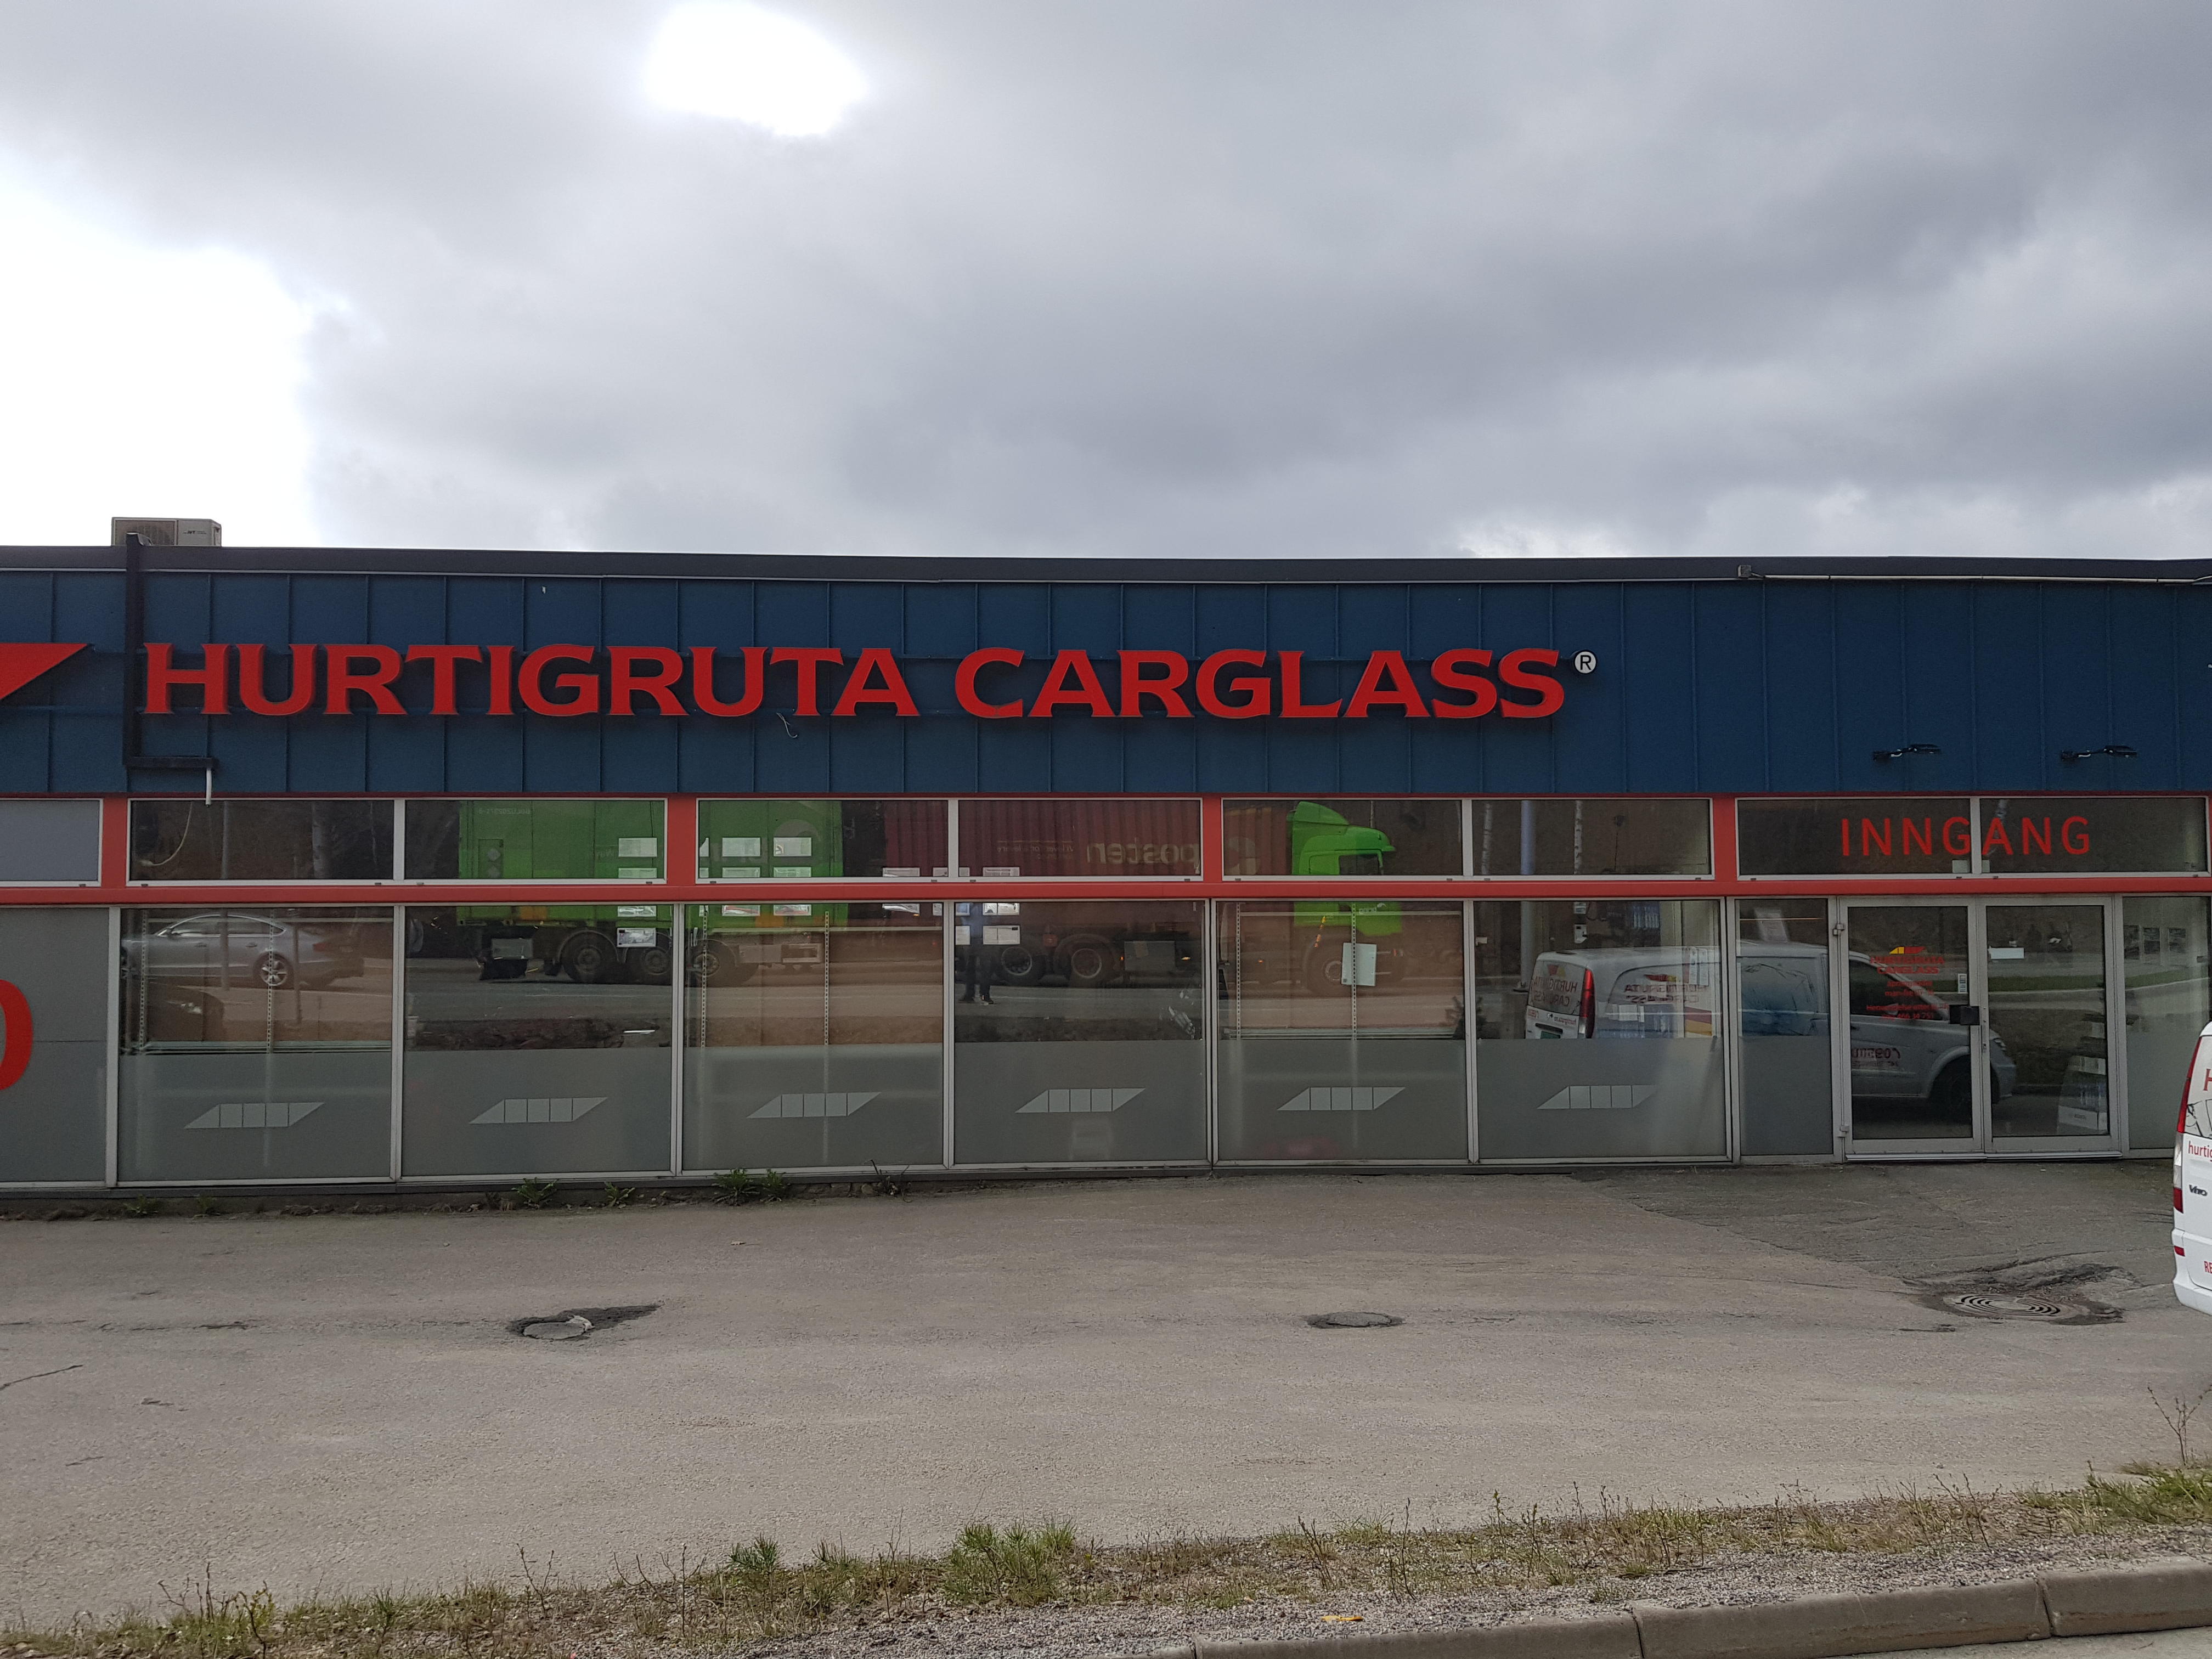 Hurtigruta Carglass® Kristiansand Barstølveien Bilglass, Kristiansand - 2